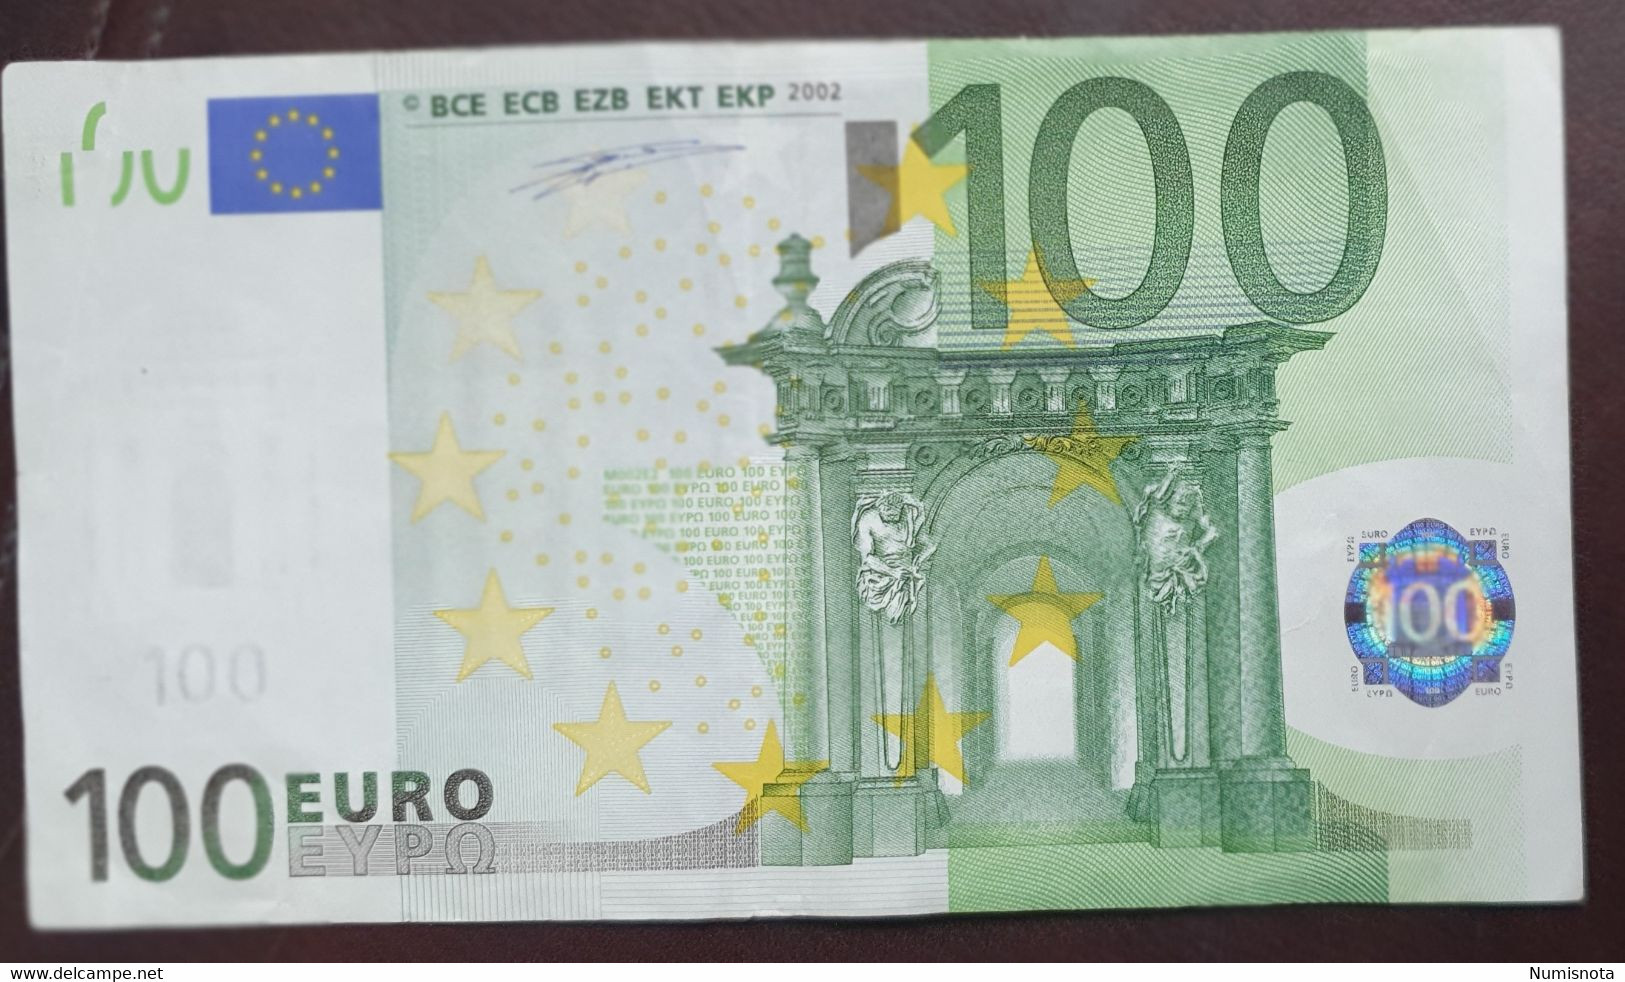 100 Euro 2002 M002 V00 Spain Duisenberg Nº Bajo / Low Number Circulated - 100 Euro